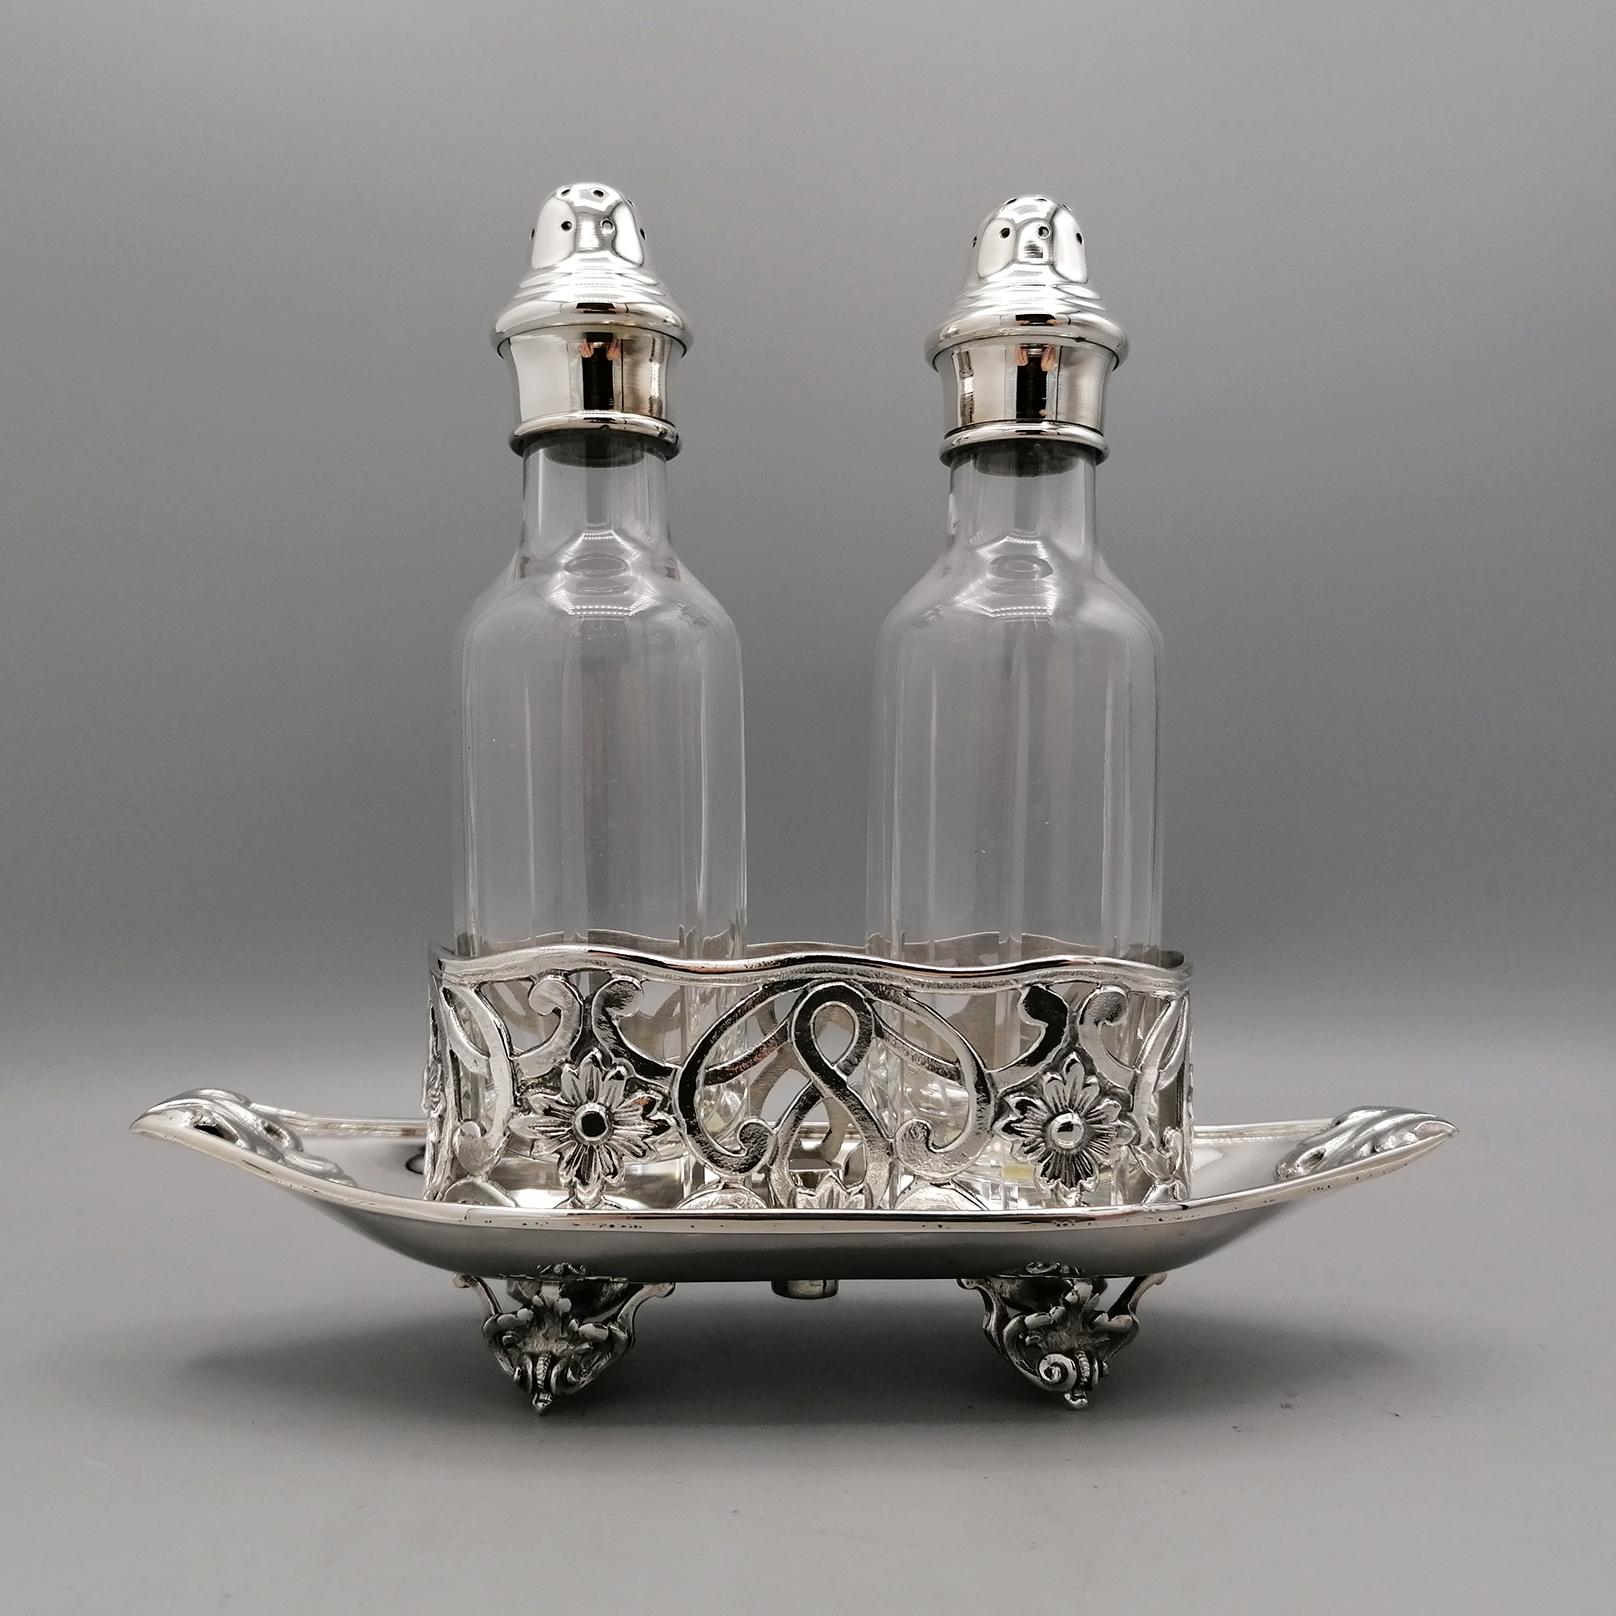 20th Century Italian Art Nouveau - Liberty replica Sterling Silver - Cruet Set  For Sale 6